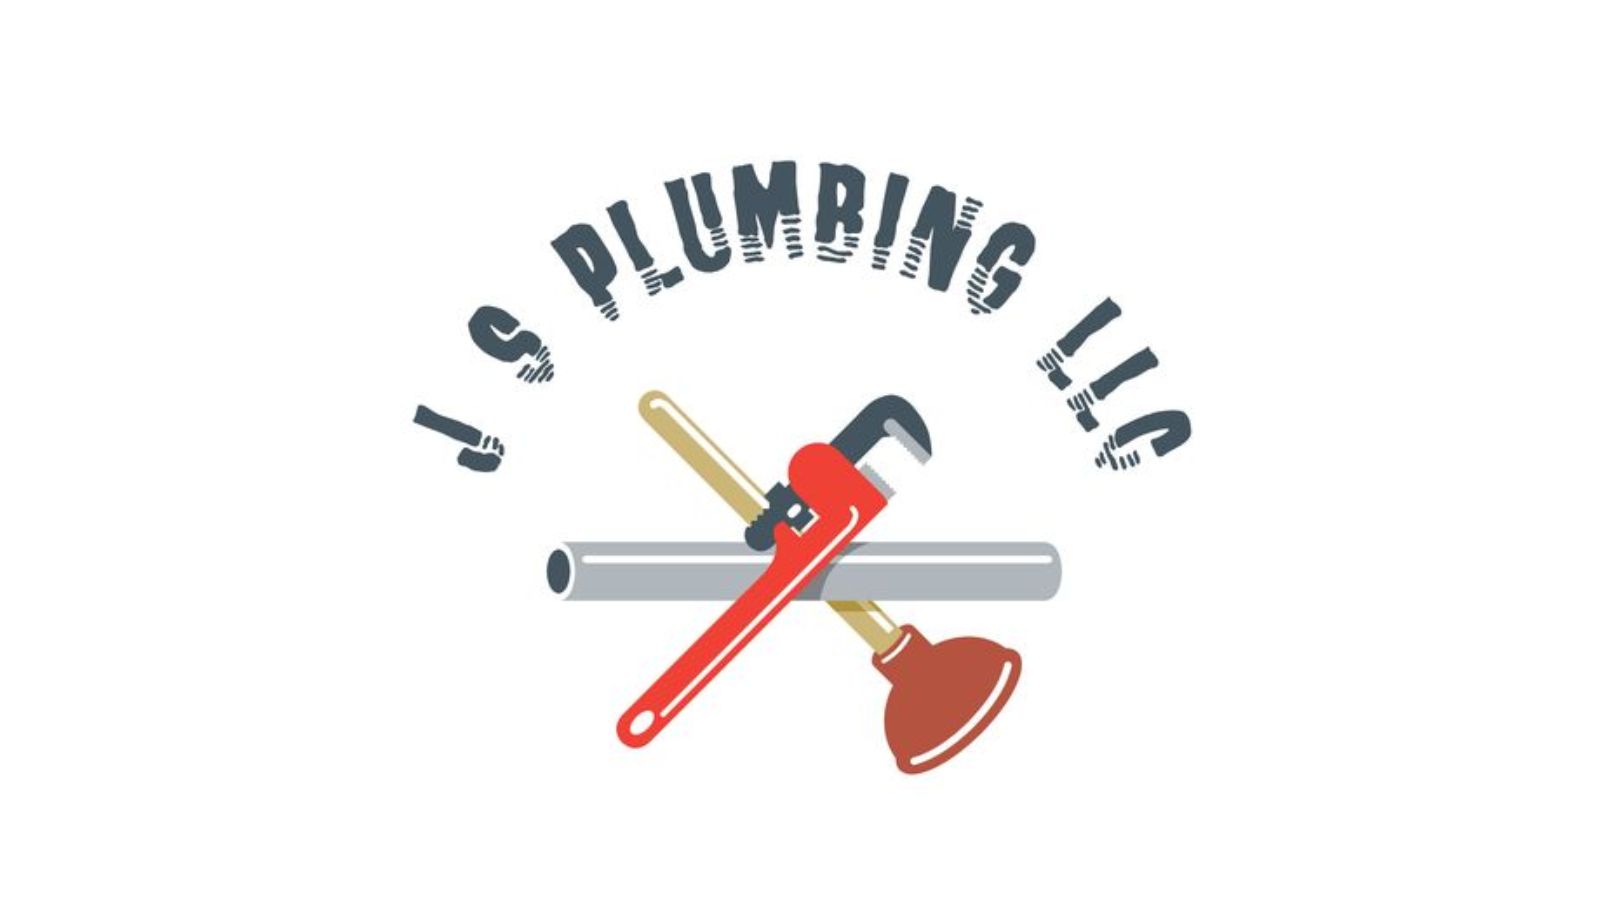 js plumbing llc - bighomeprojects.com